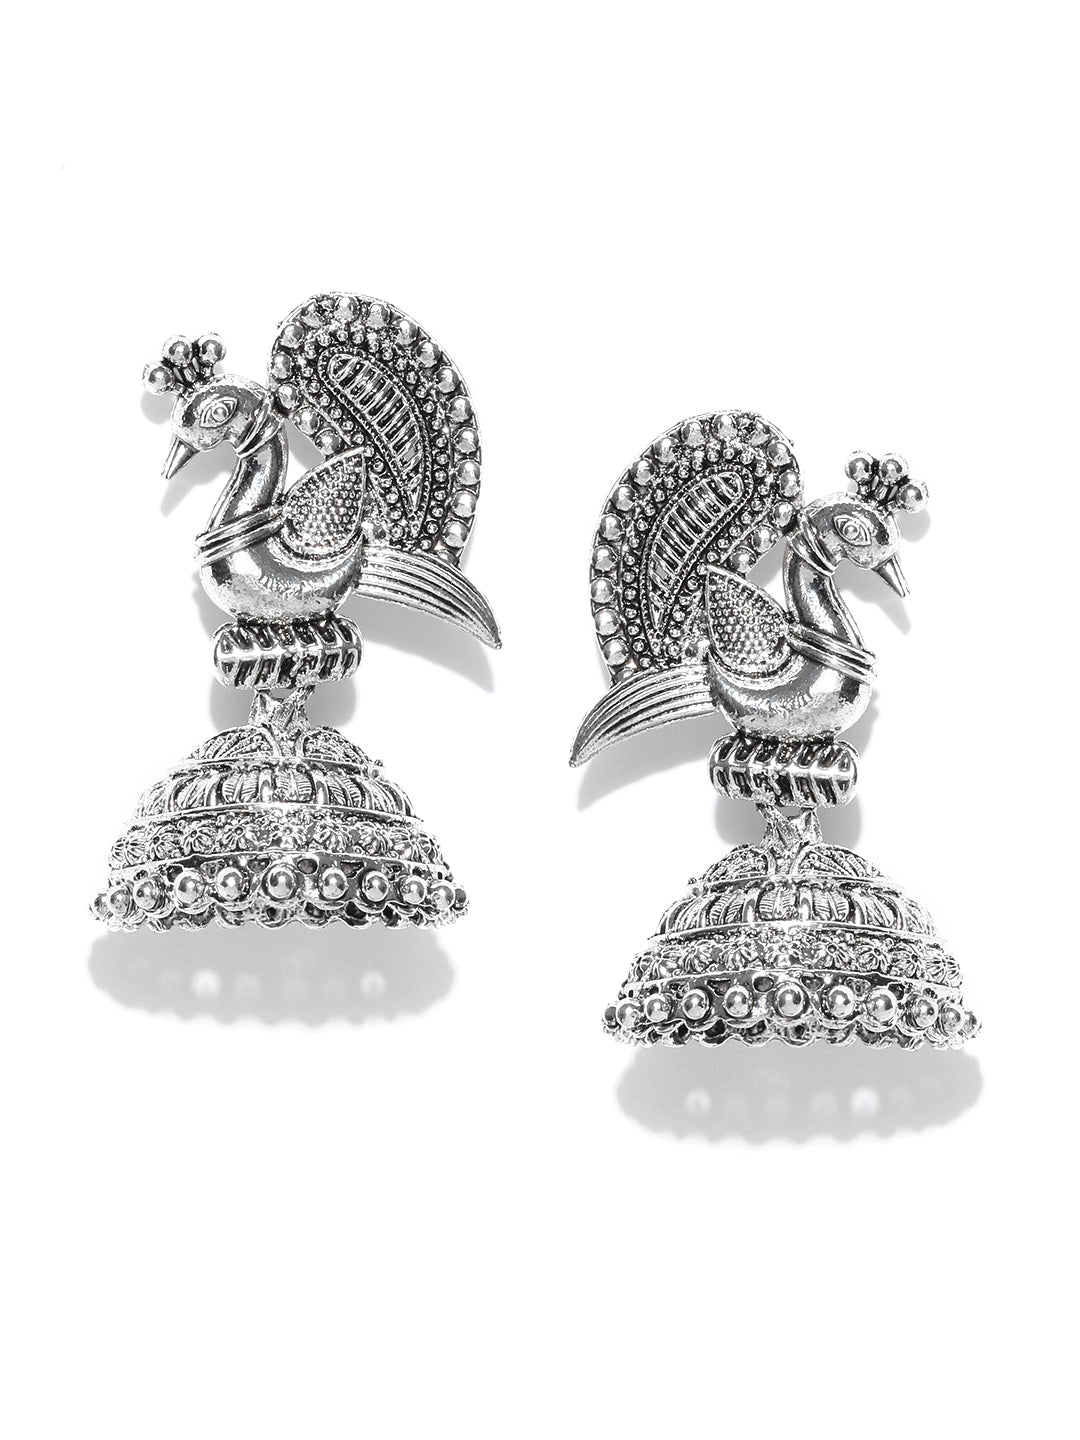 Oxidised Silver-Toned Peacock Inspired Earrings